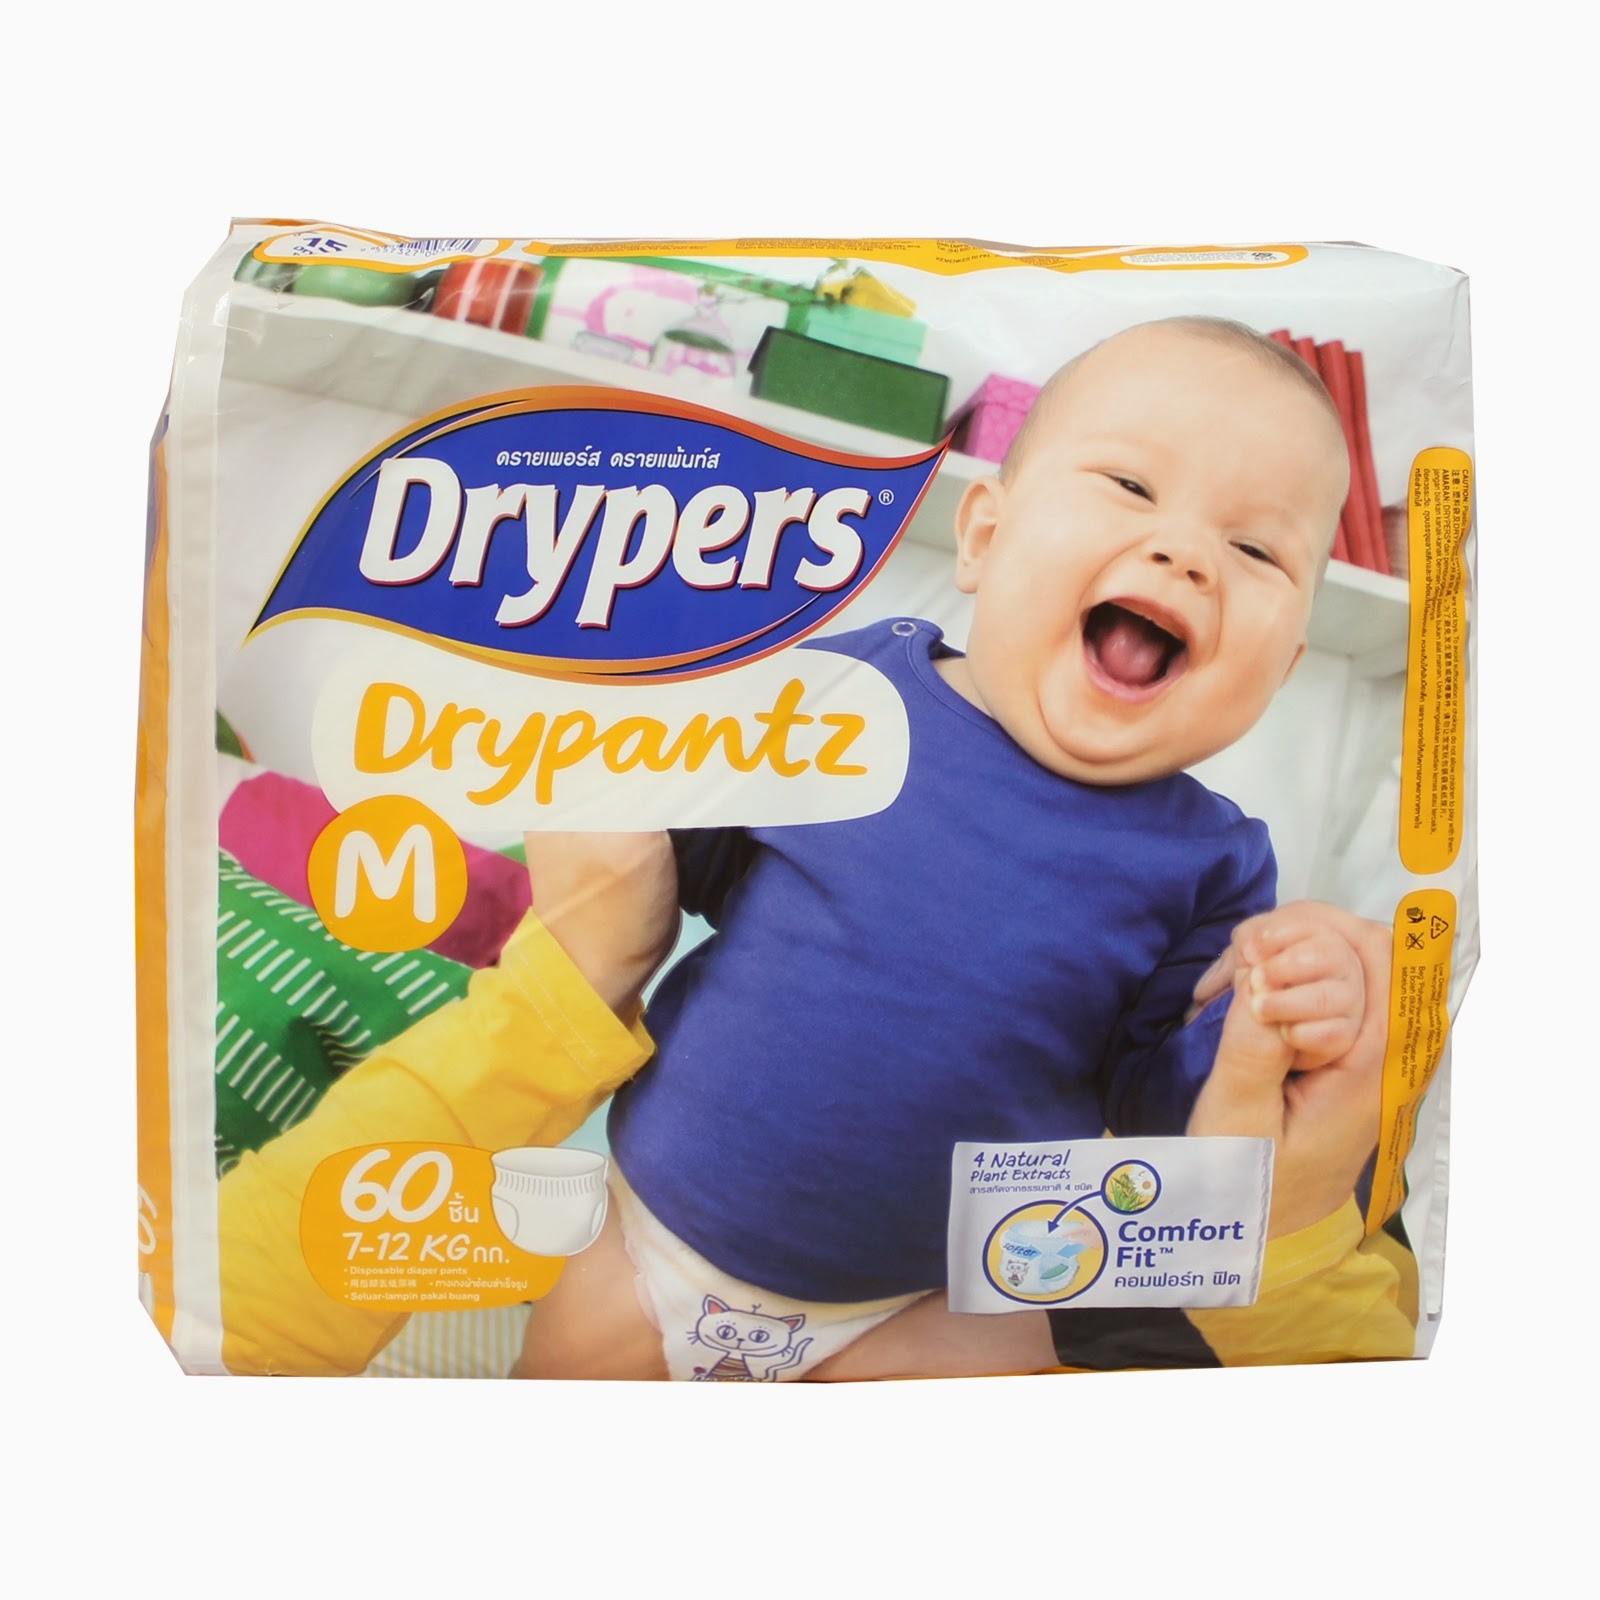 Drypers Murah 2015  newhairstylesformen2014.com